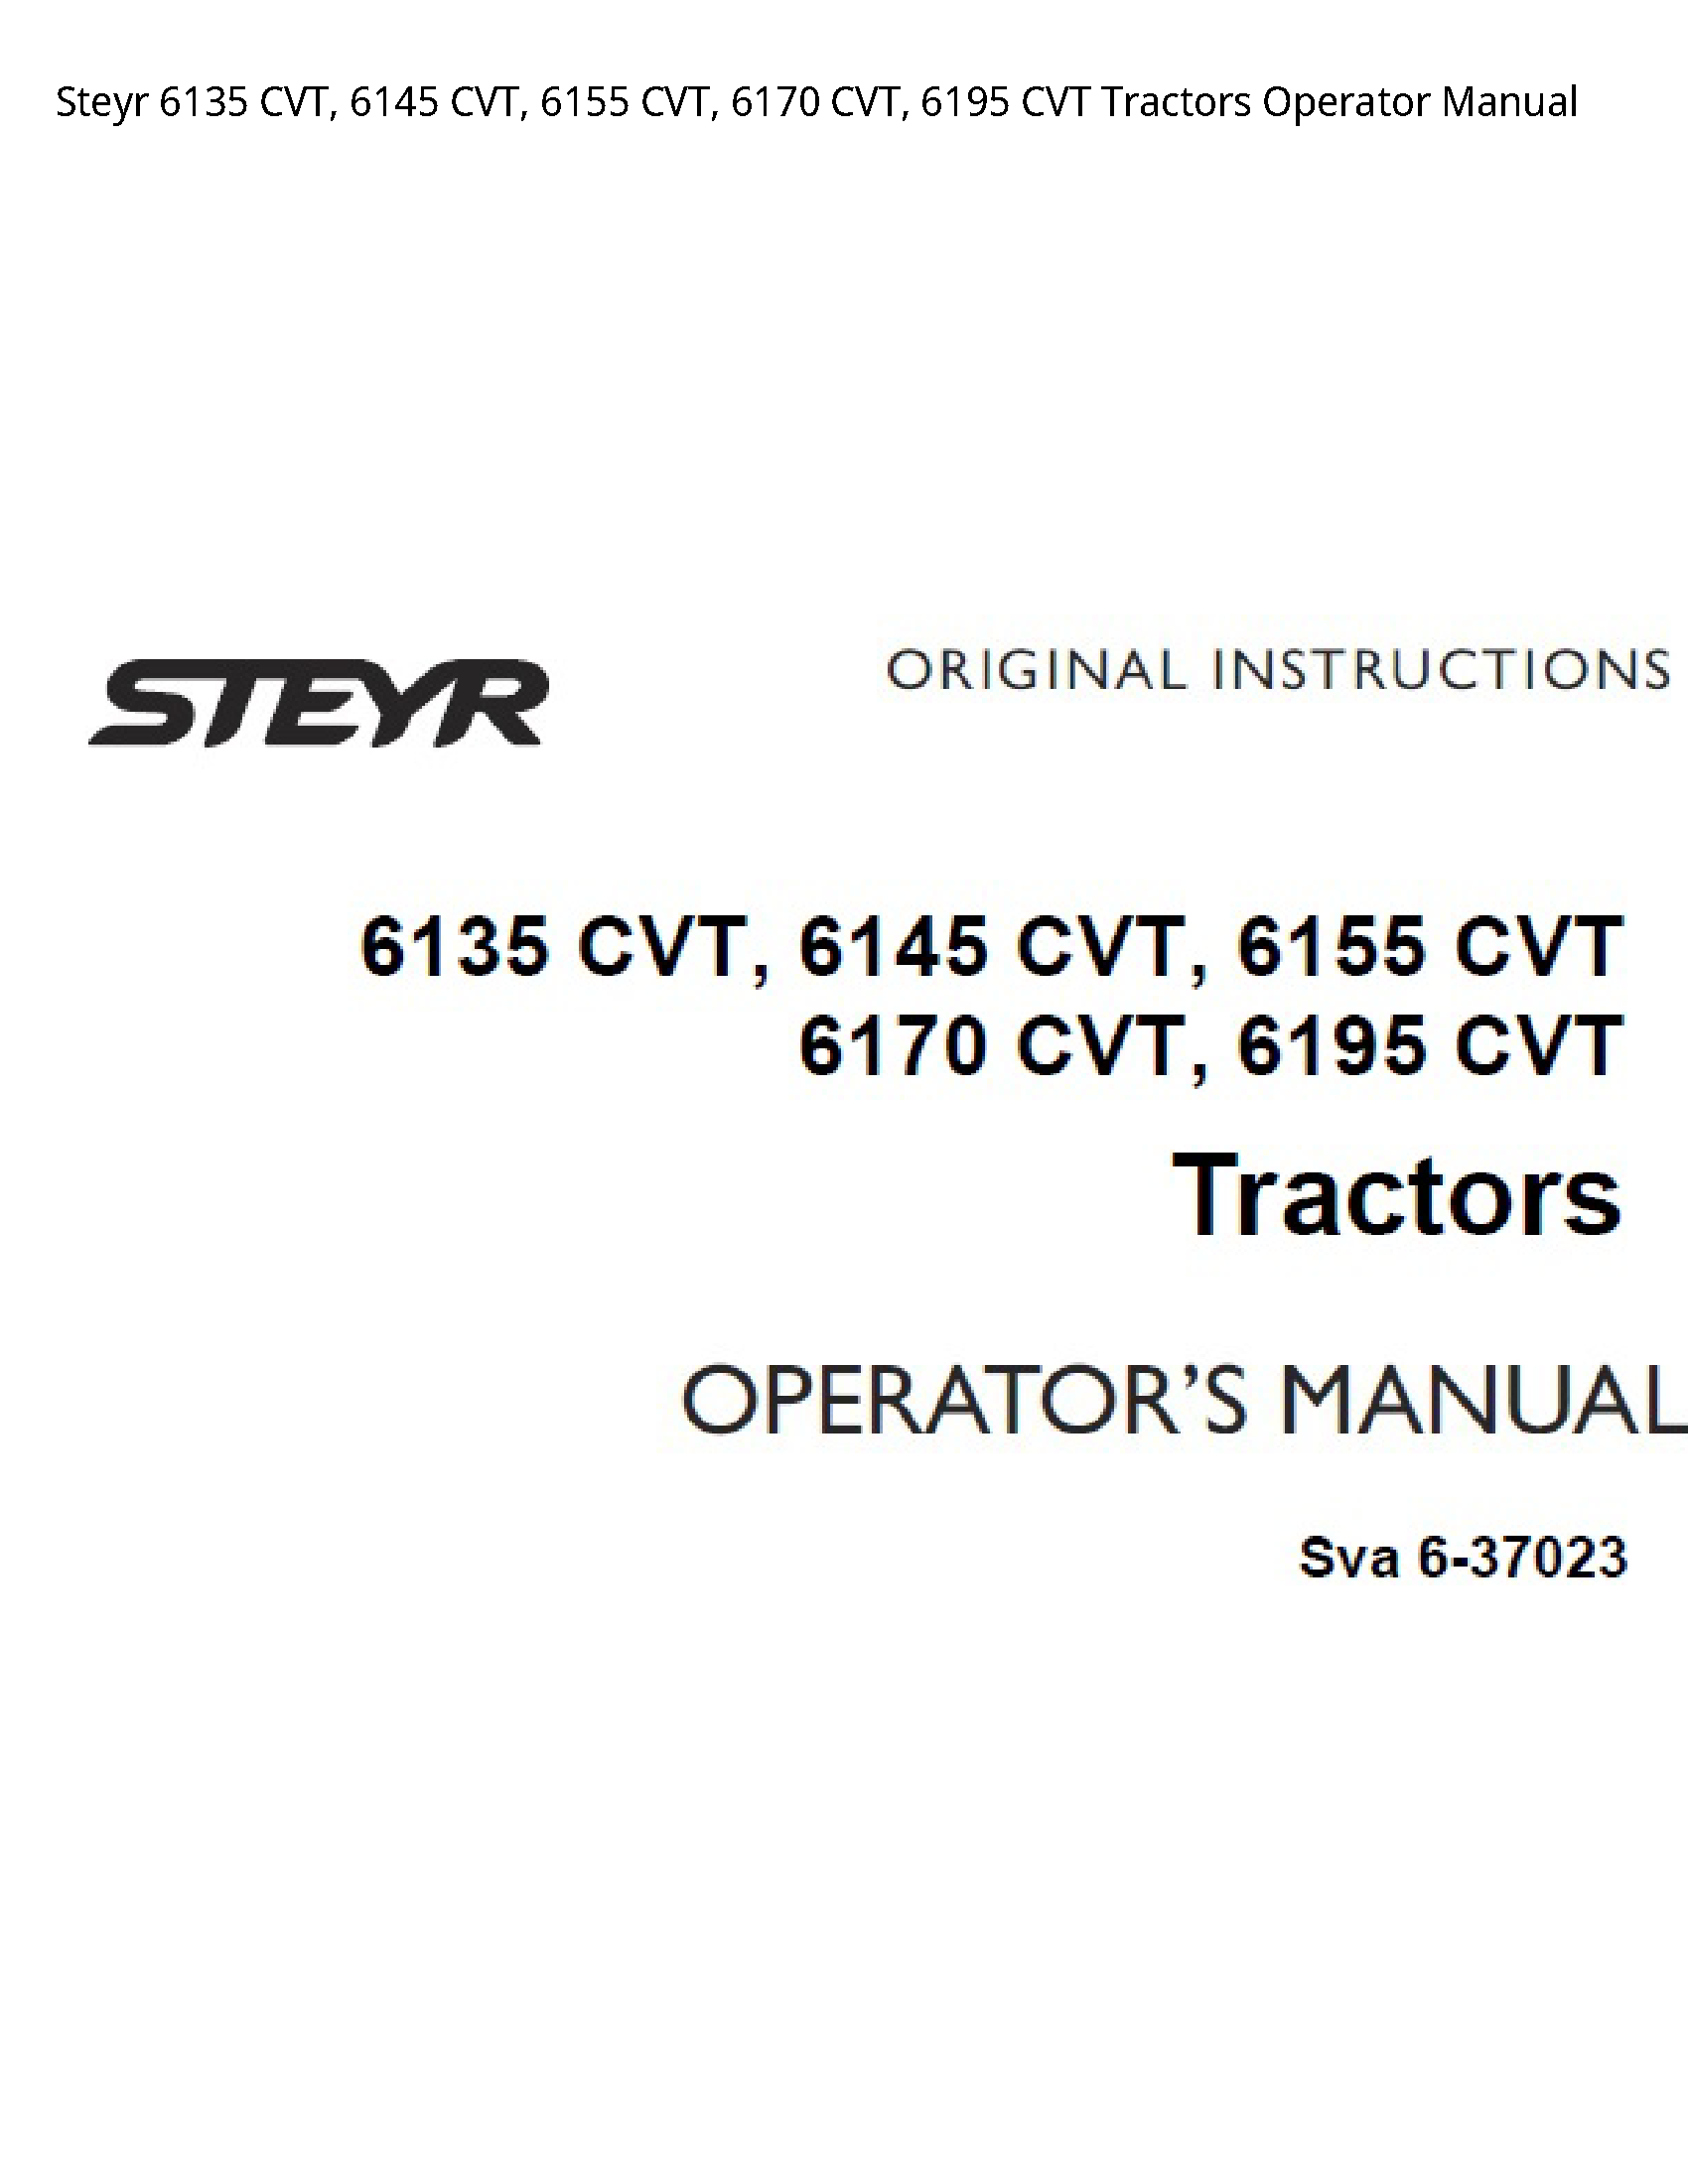 Steyr 6135 CVT manual